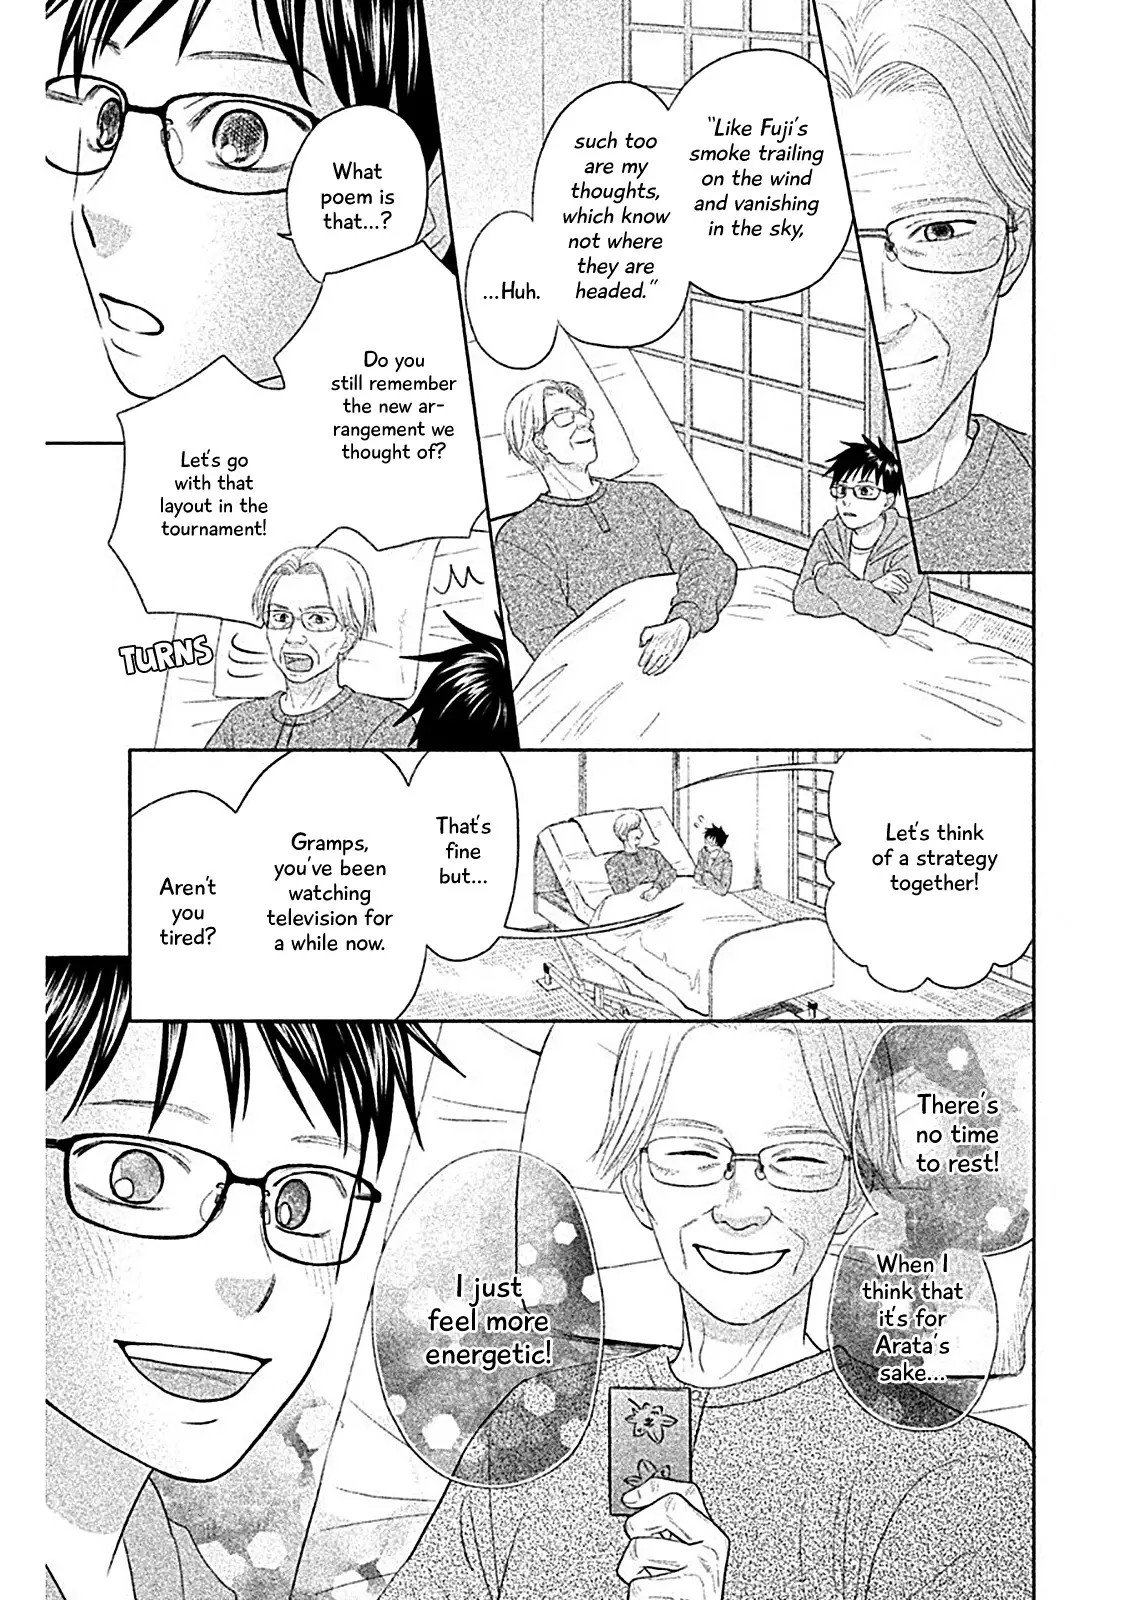 Chihayafuru: Middle School Arc - 6 page 10